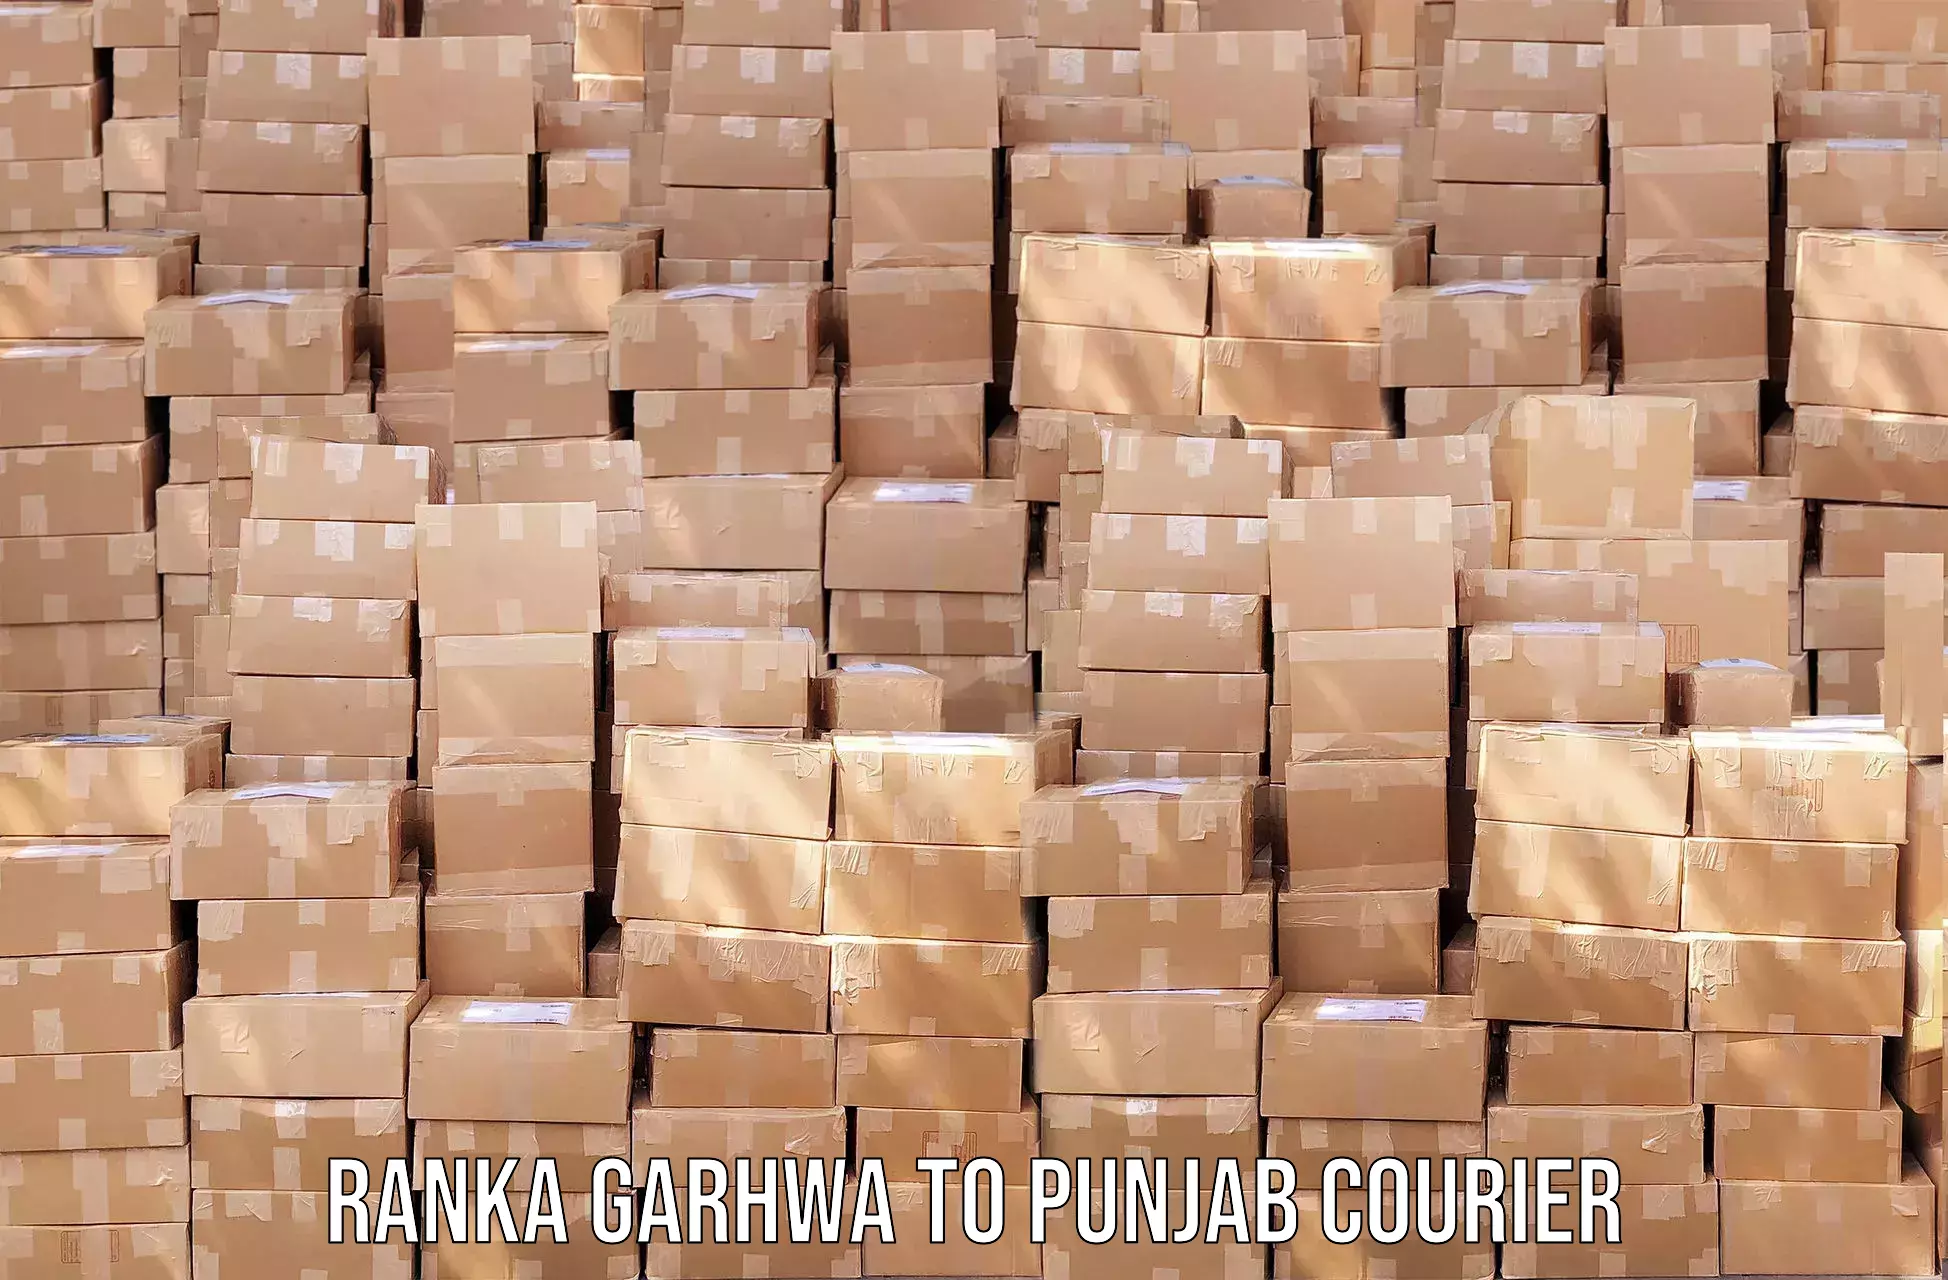 Parcel service for businesses Ranka Garhwa to Phagwara